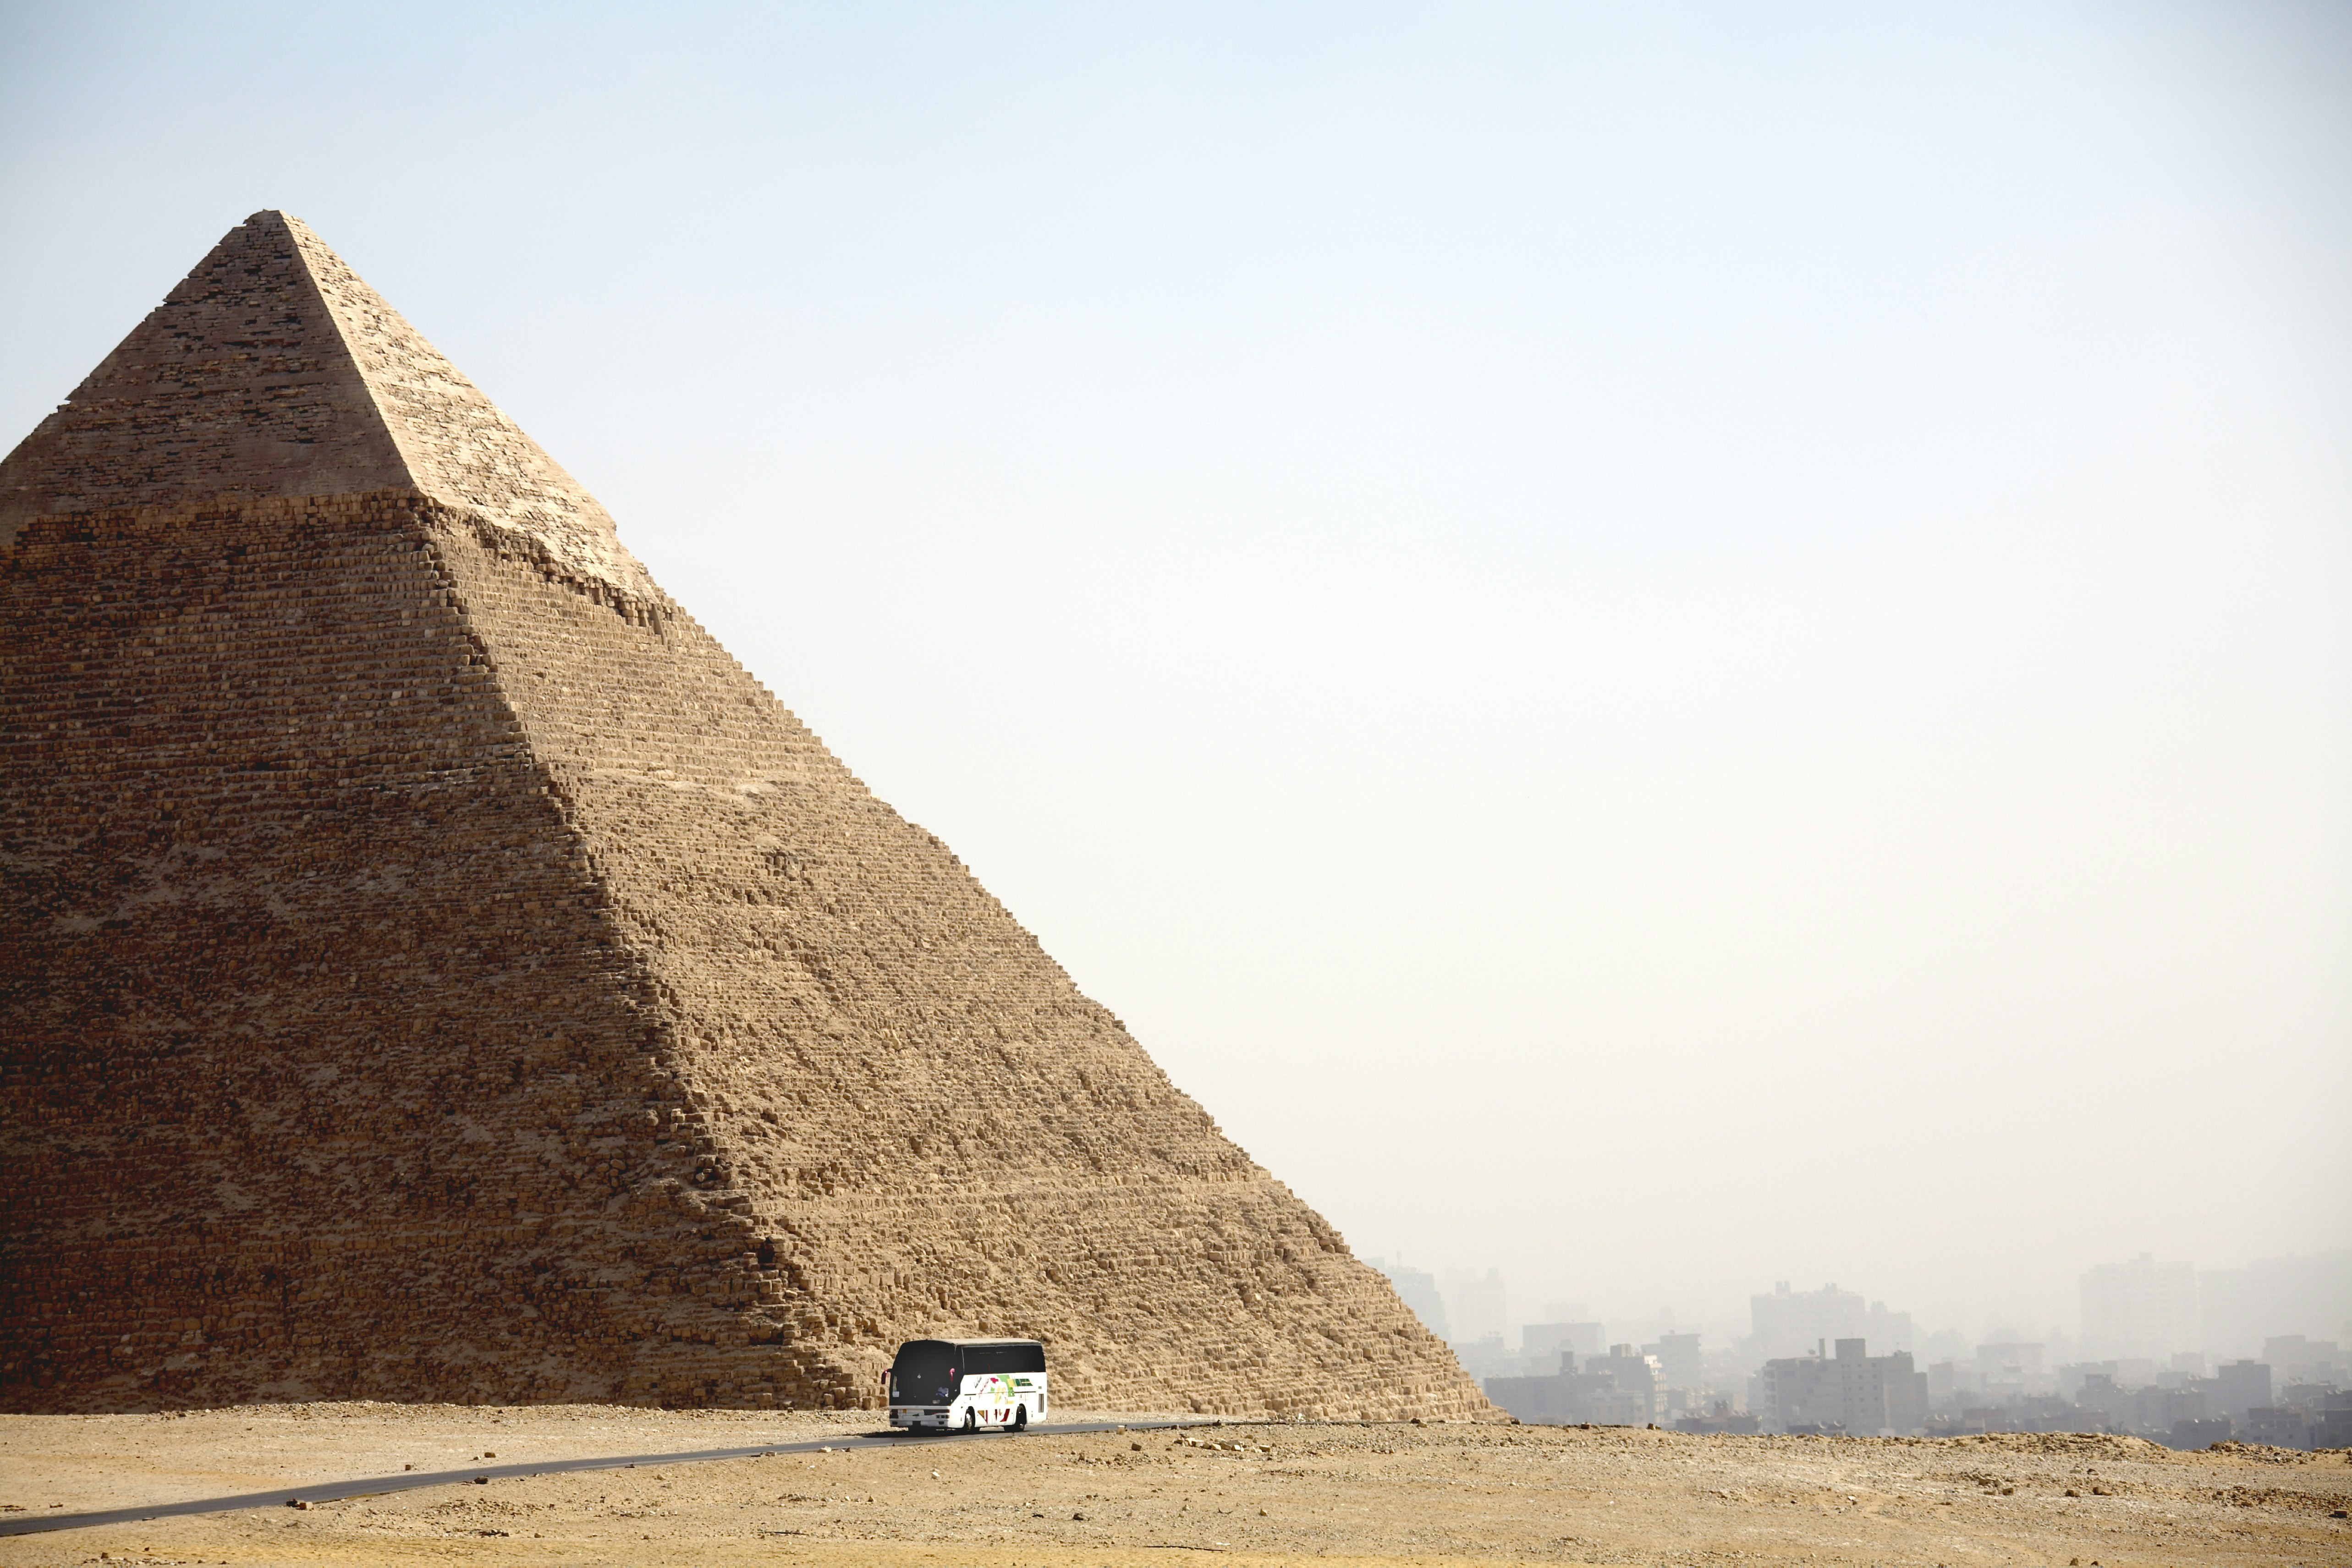 A tourist coach drives past a Pyramid in Cairo, Egypt.